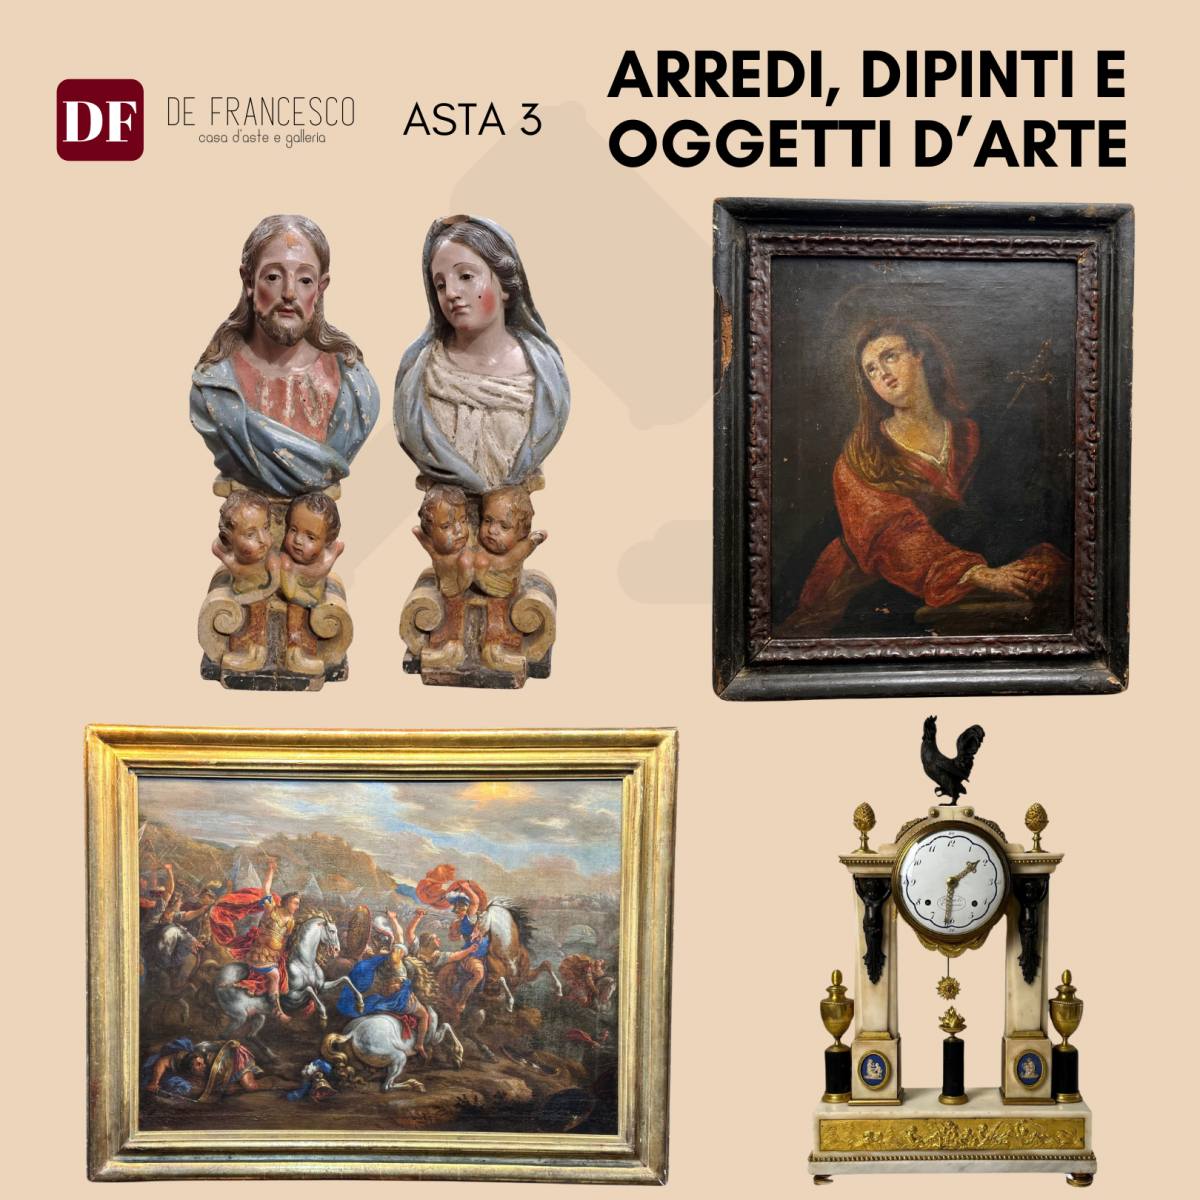 ASTA 3 - ARREDI DIPINTI E OGGETTI D'ARTE
XVII - XVIII - XIX - XX SECOLO